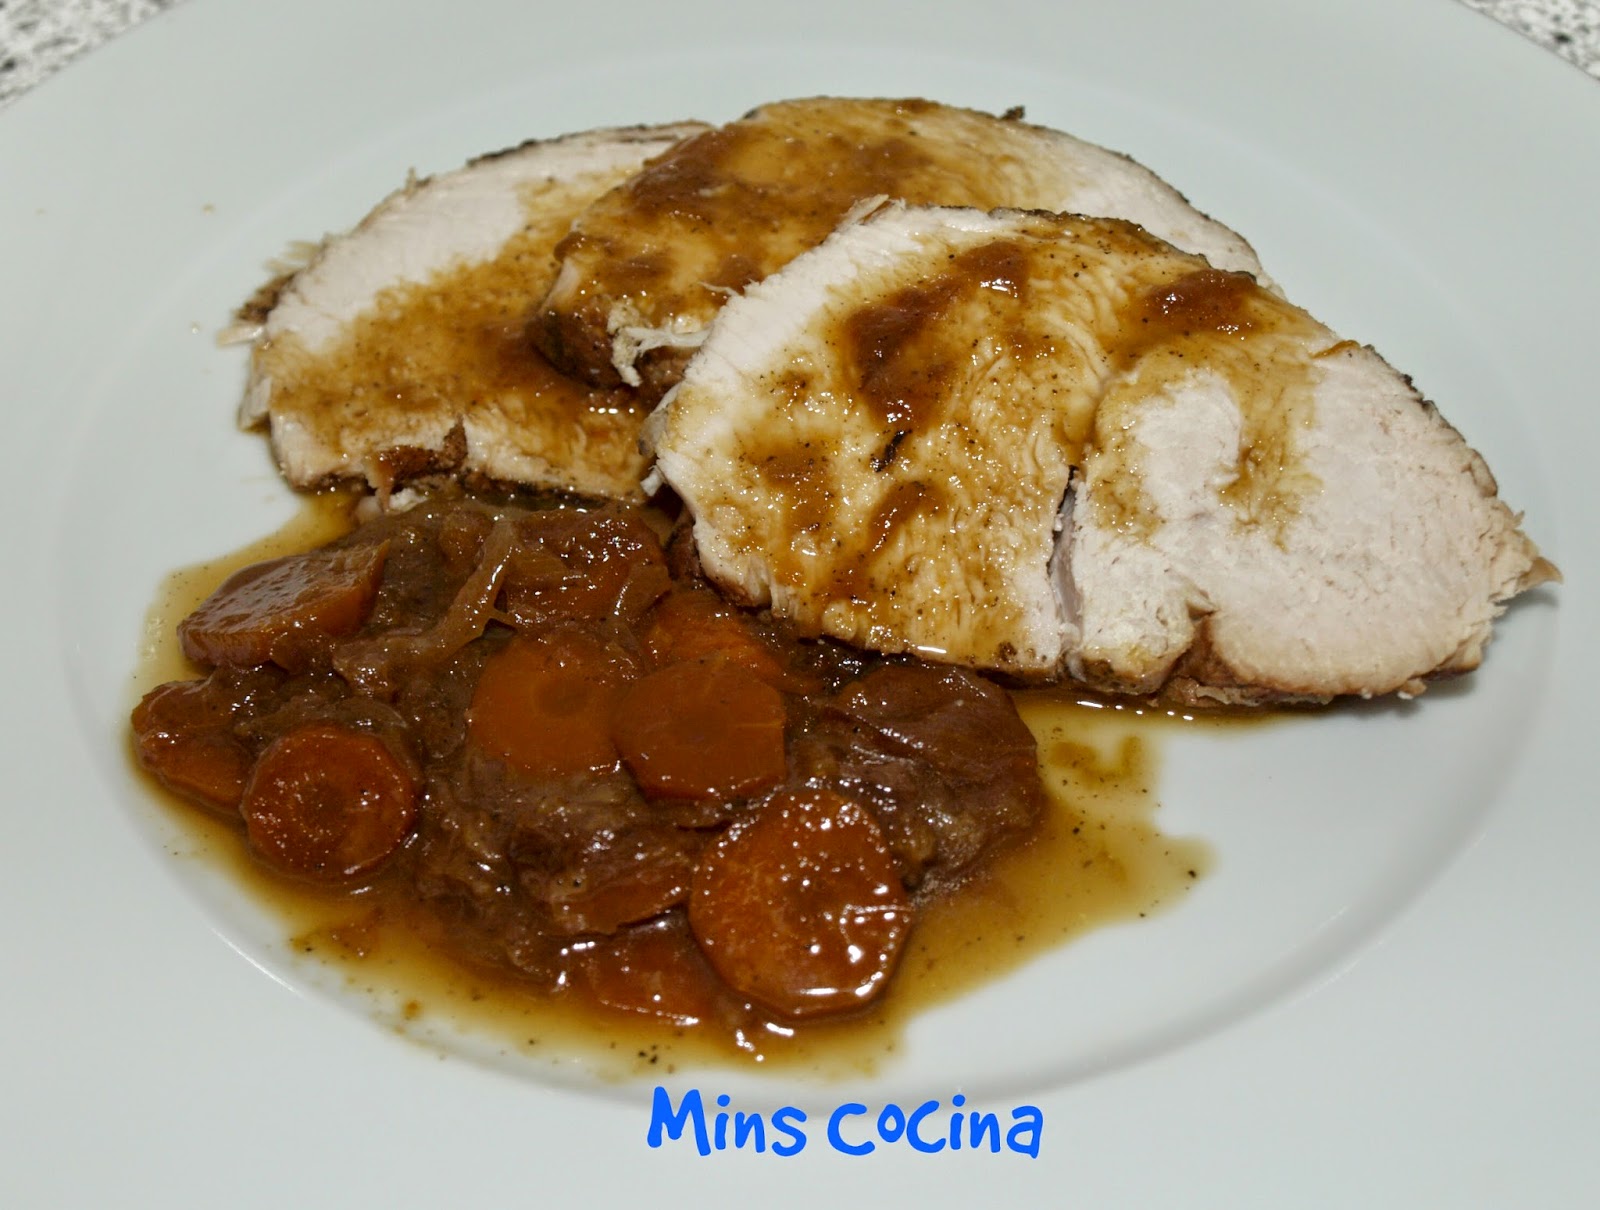 Mins Cocina: Pechuga de pavo guisada